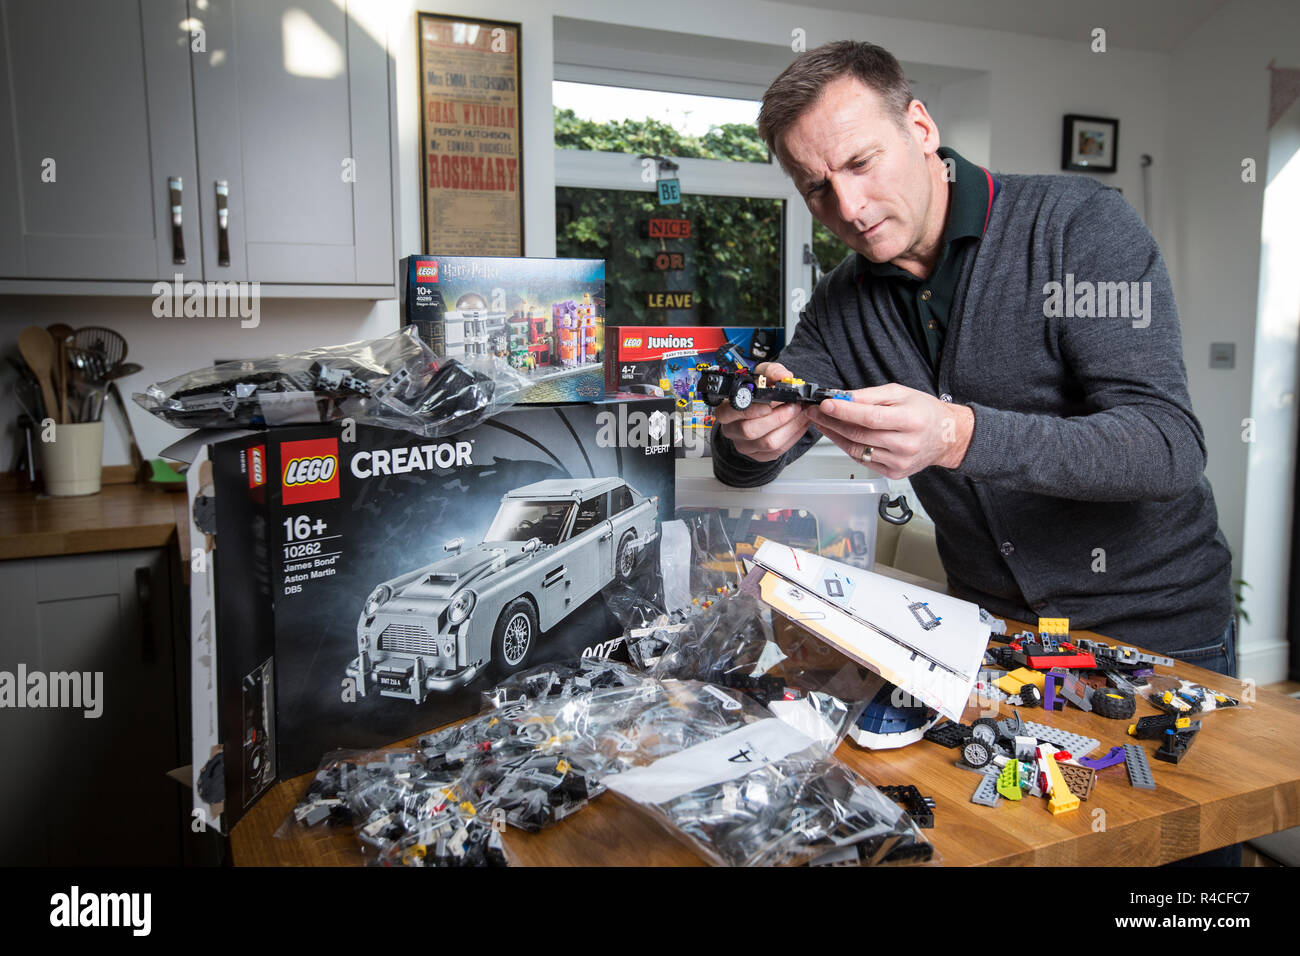 Uomo di mezza età costruzione Lego a casa in Inghilterra, come